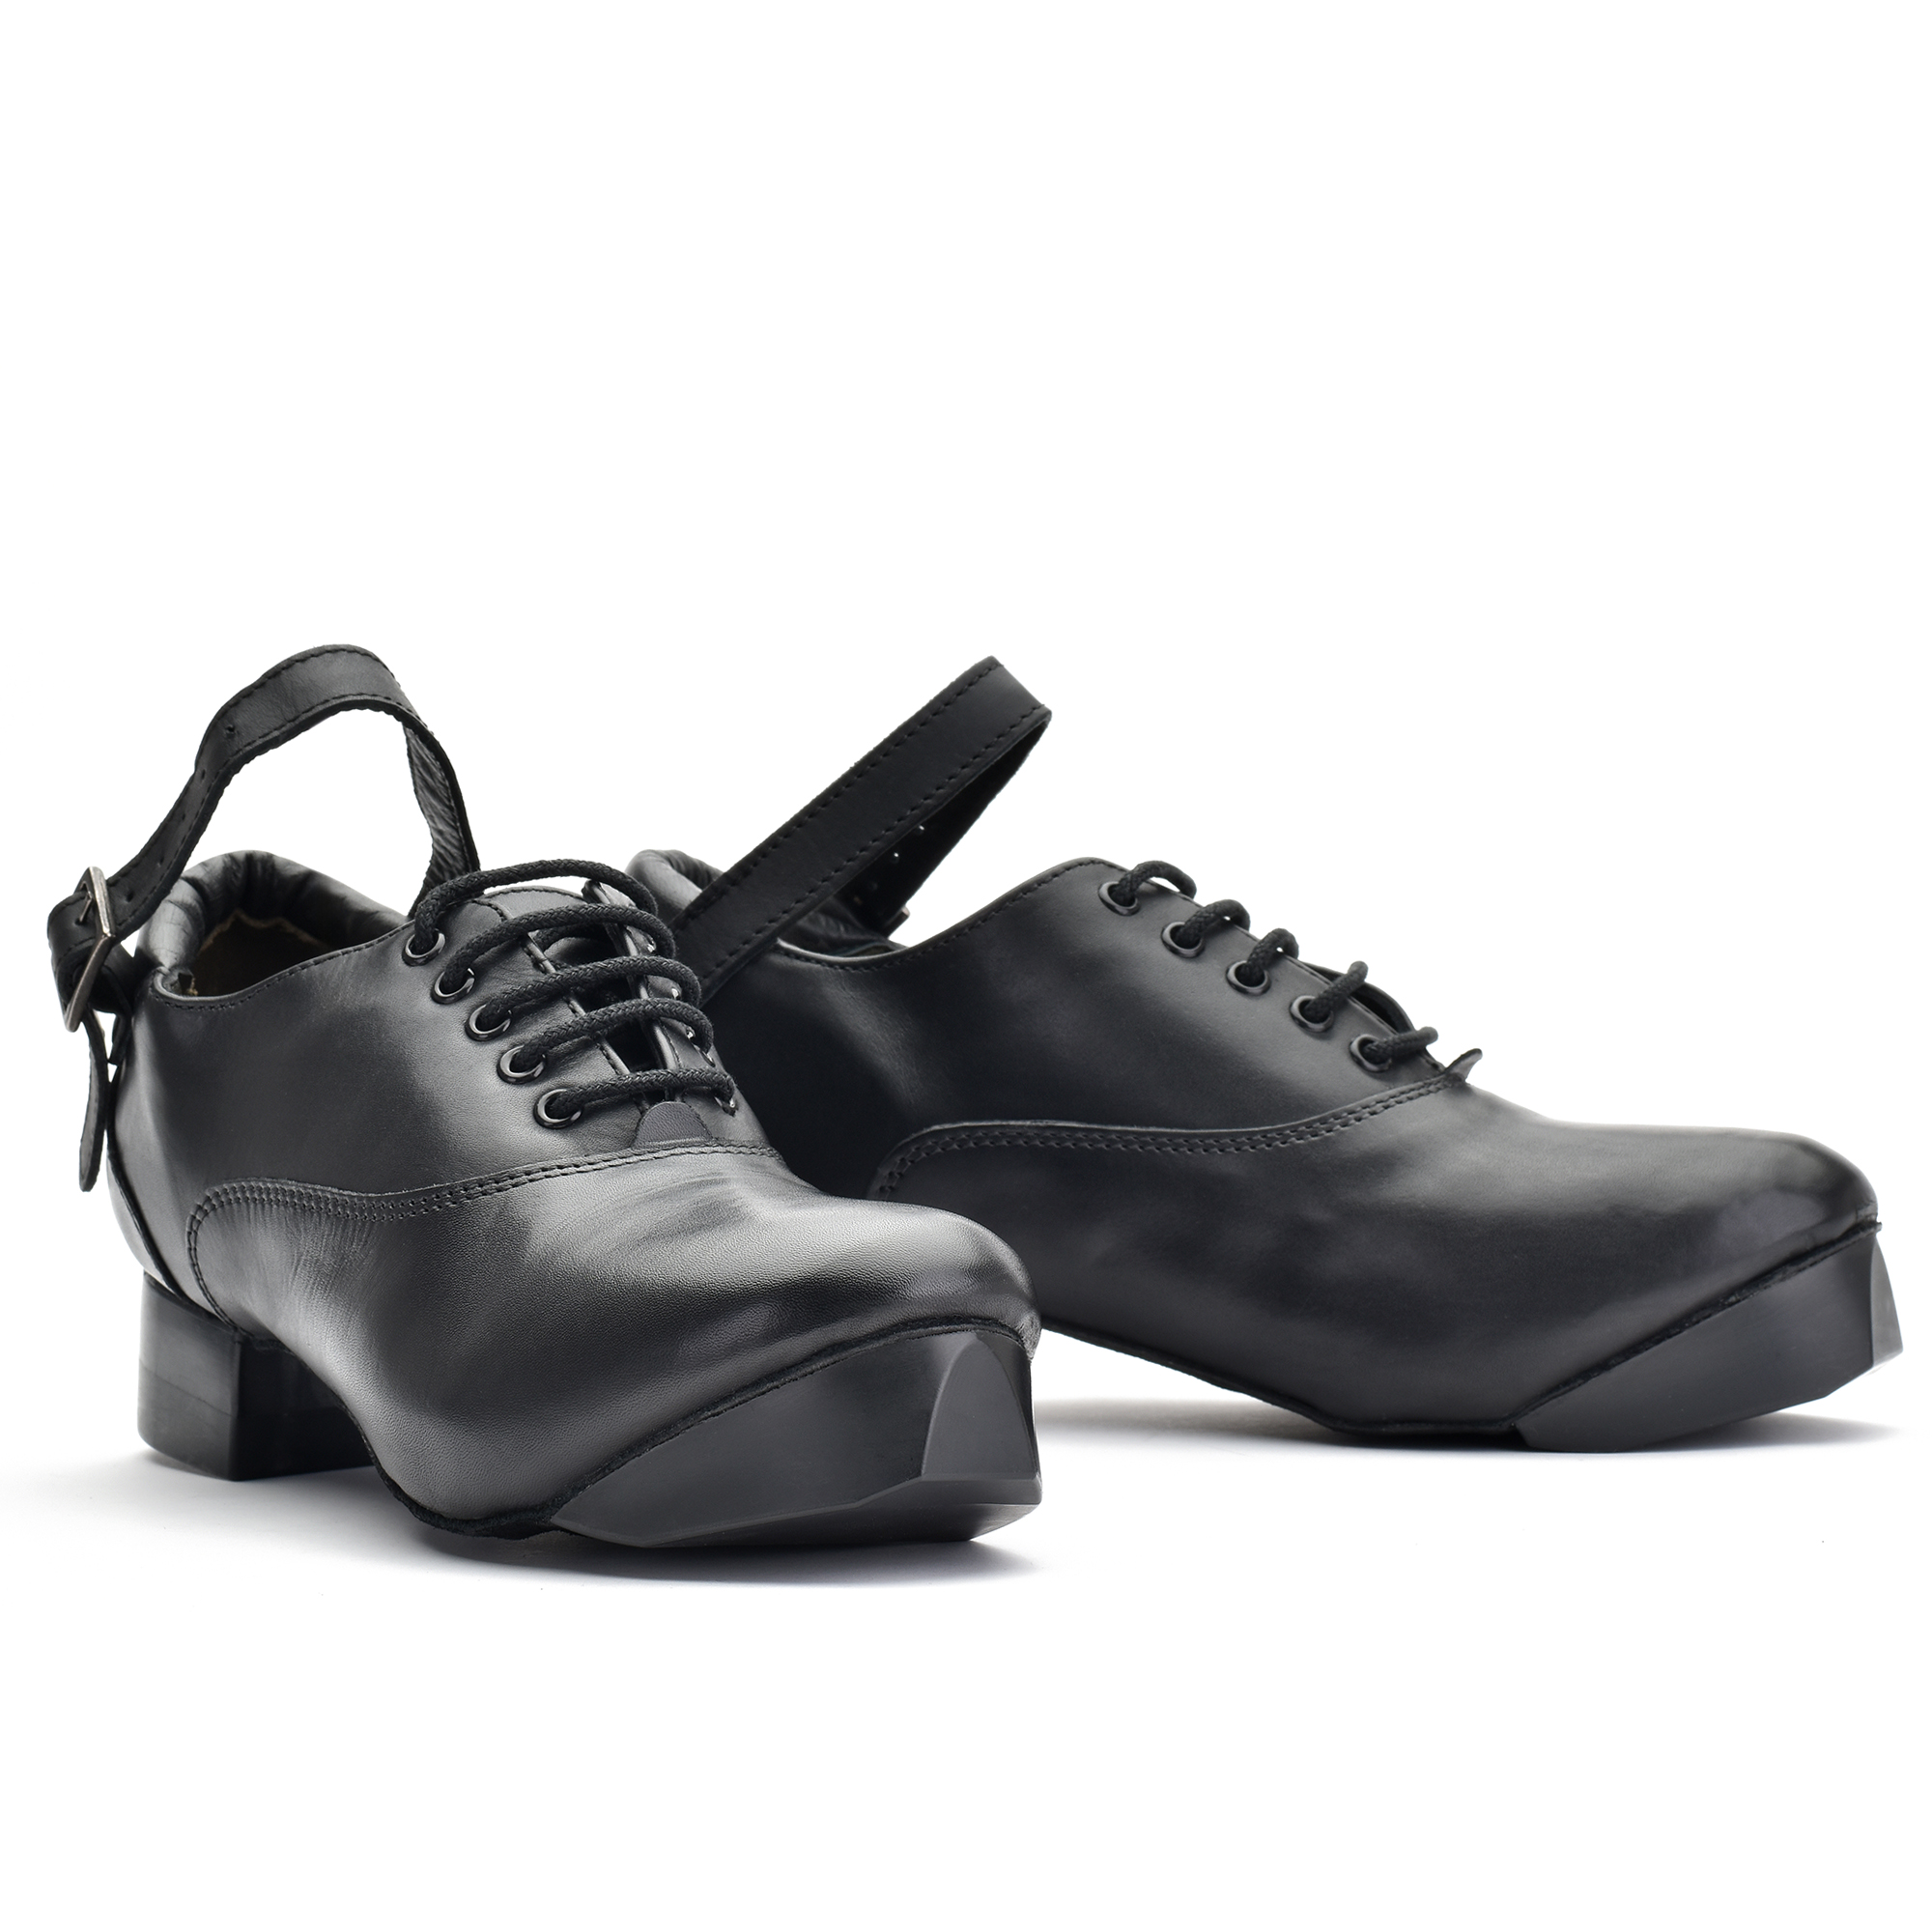 Classic Hard Irish Dance Shoes pair front